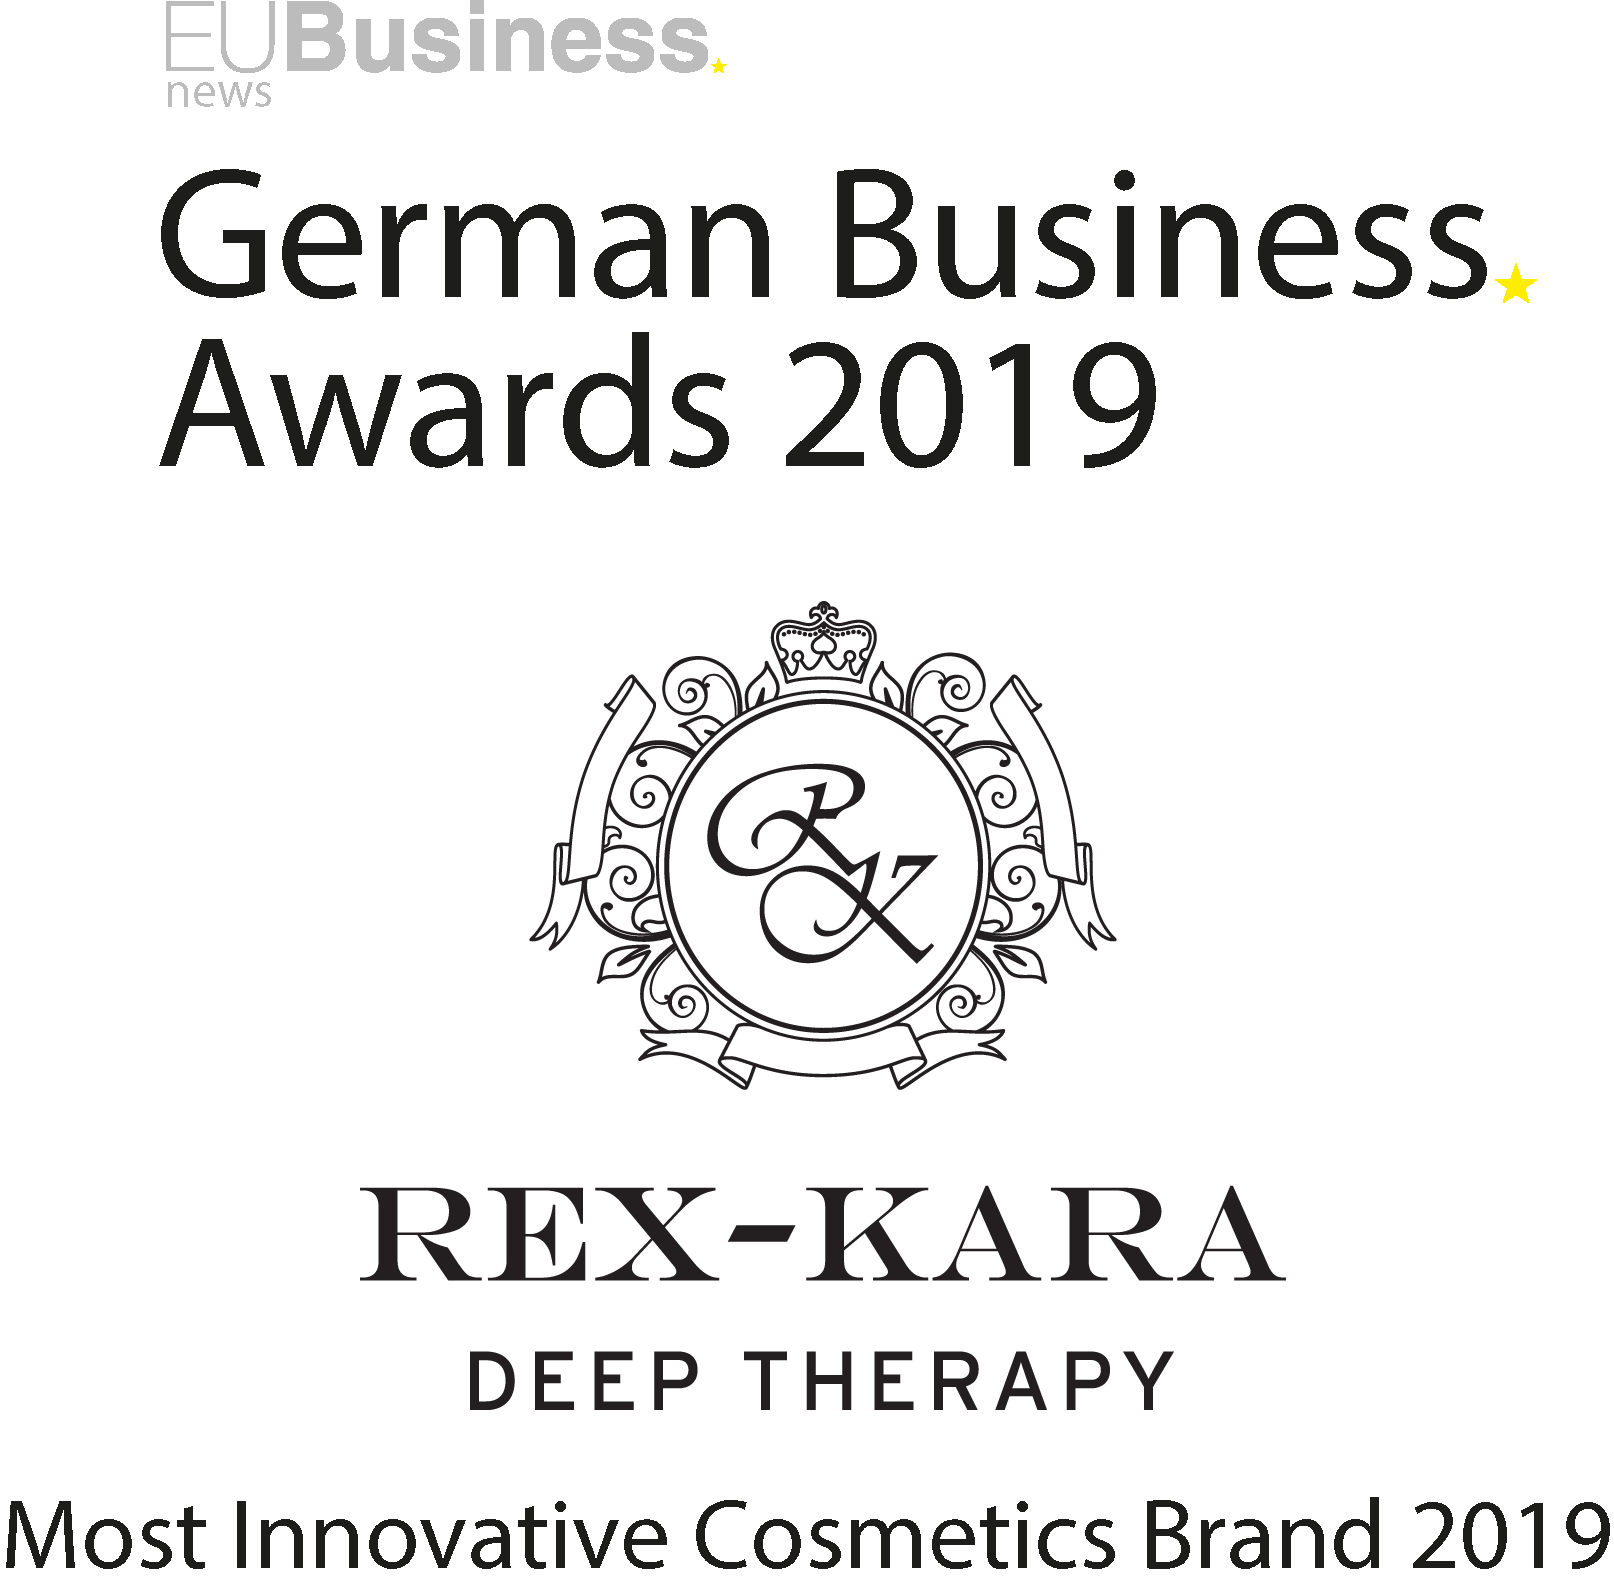 Ups-hier sollte der Rex-Kara German business award 2019